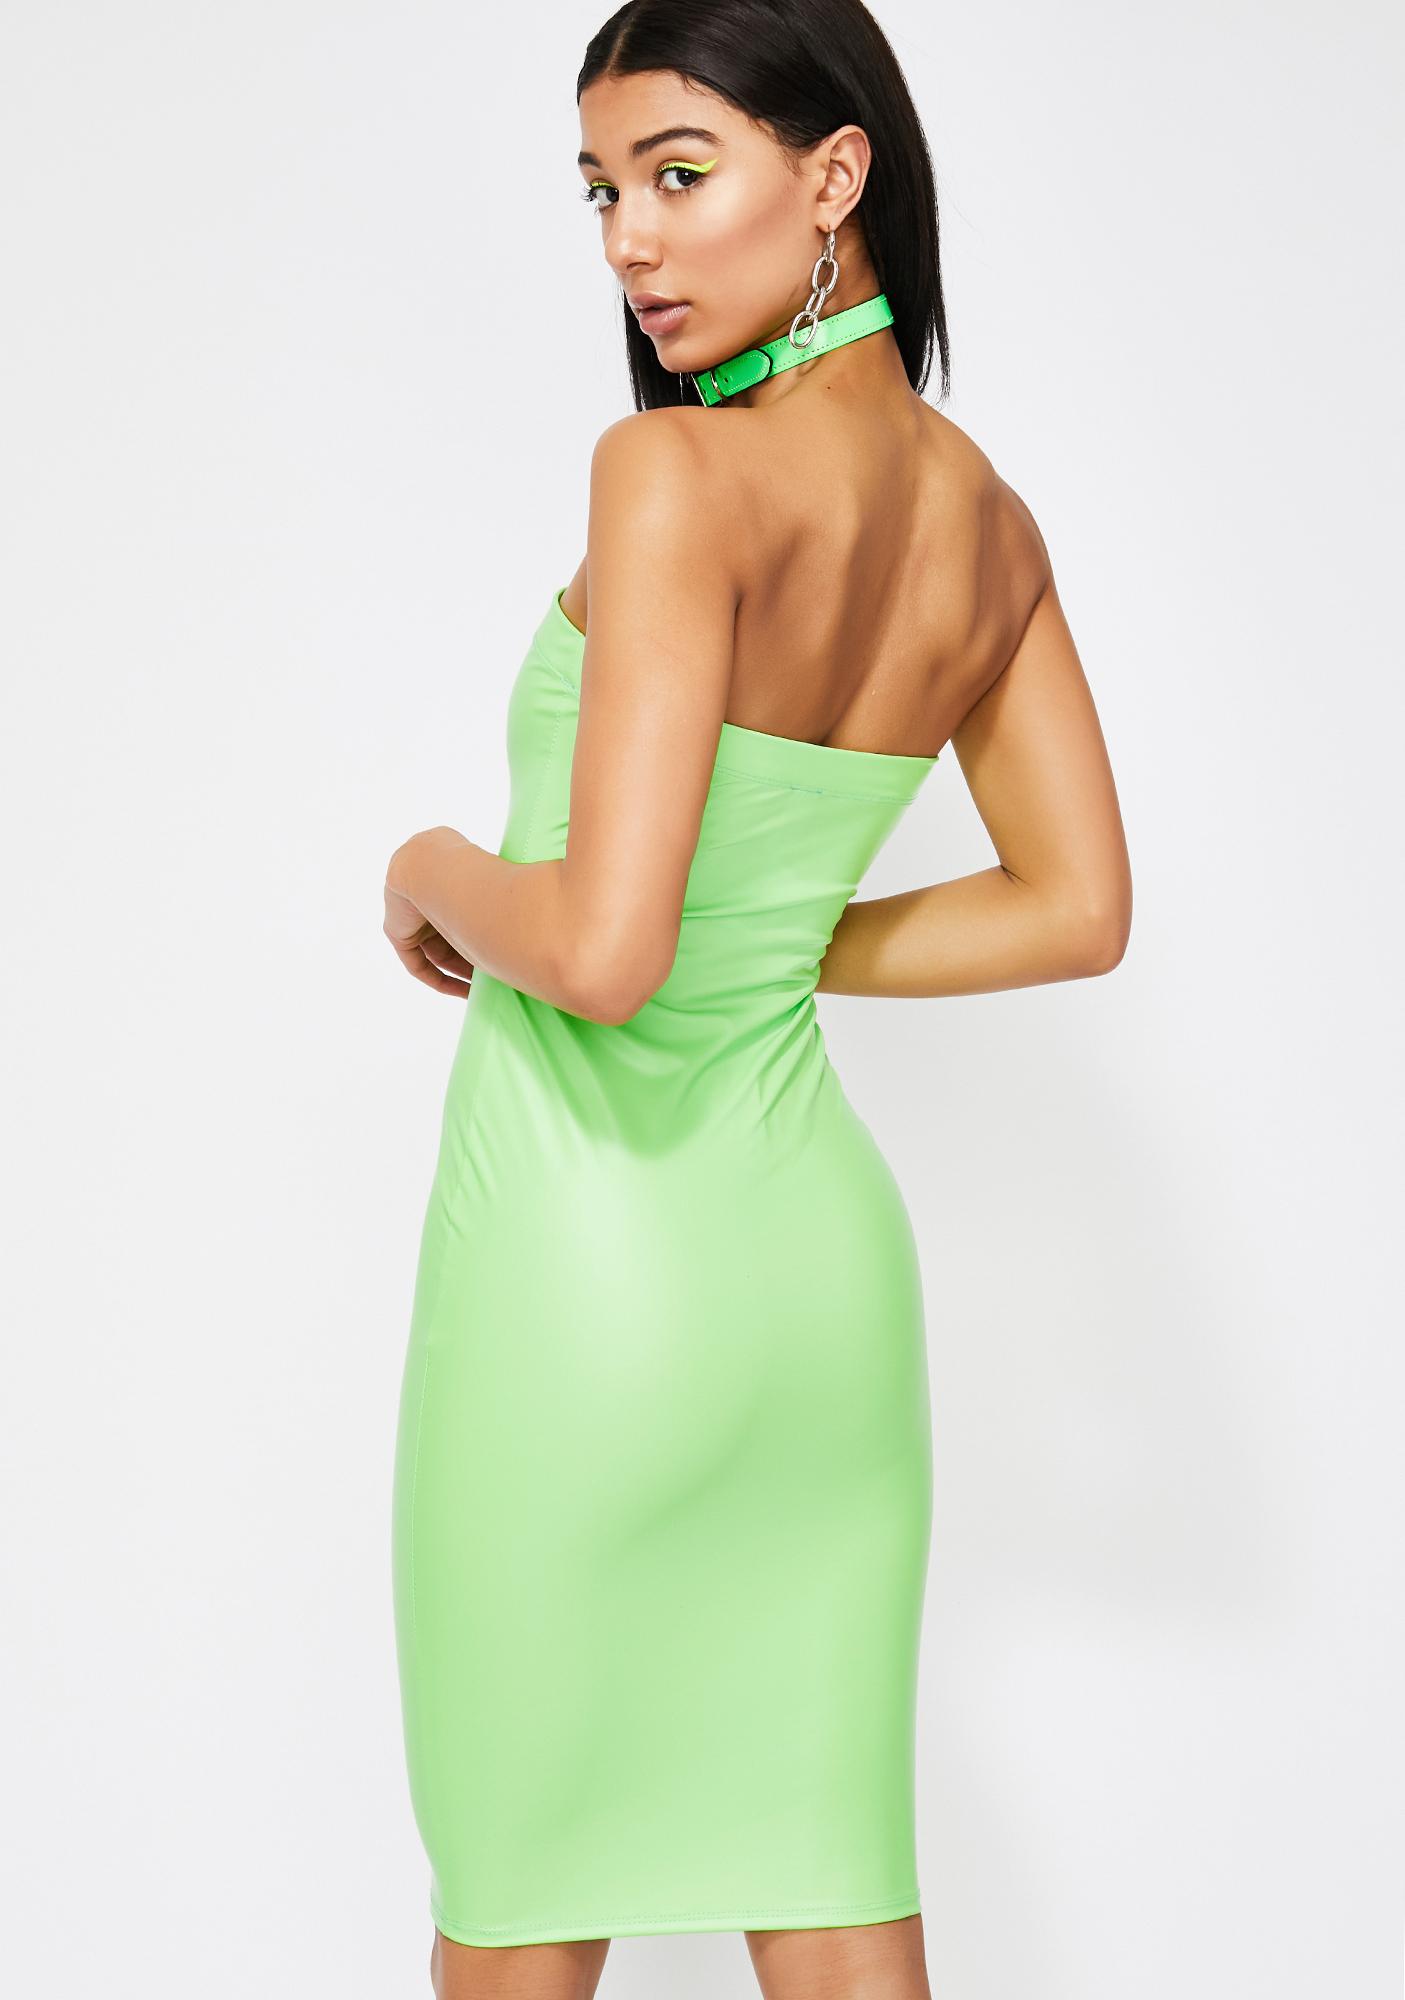 bright green bodycon dress